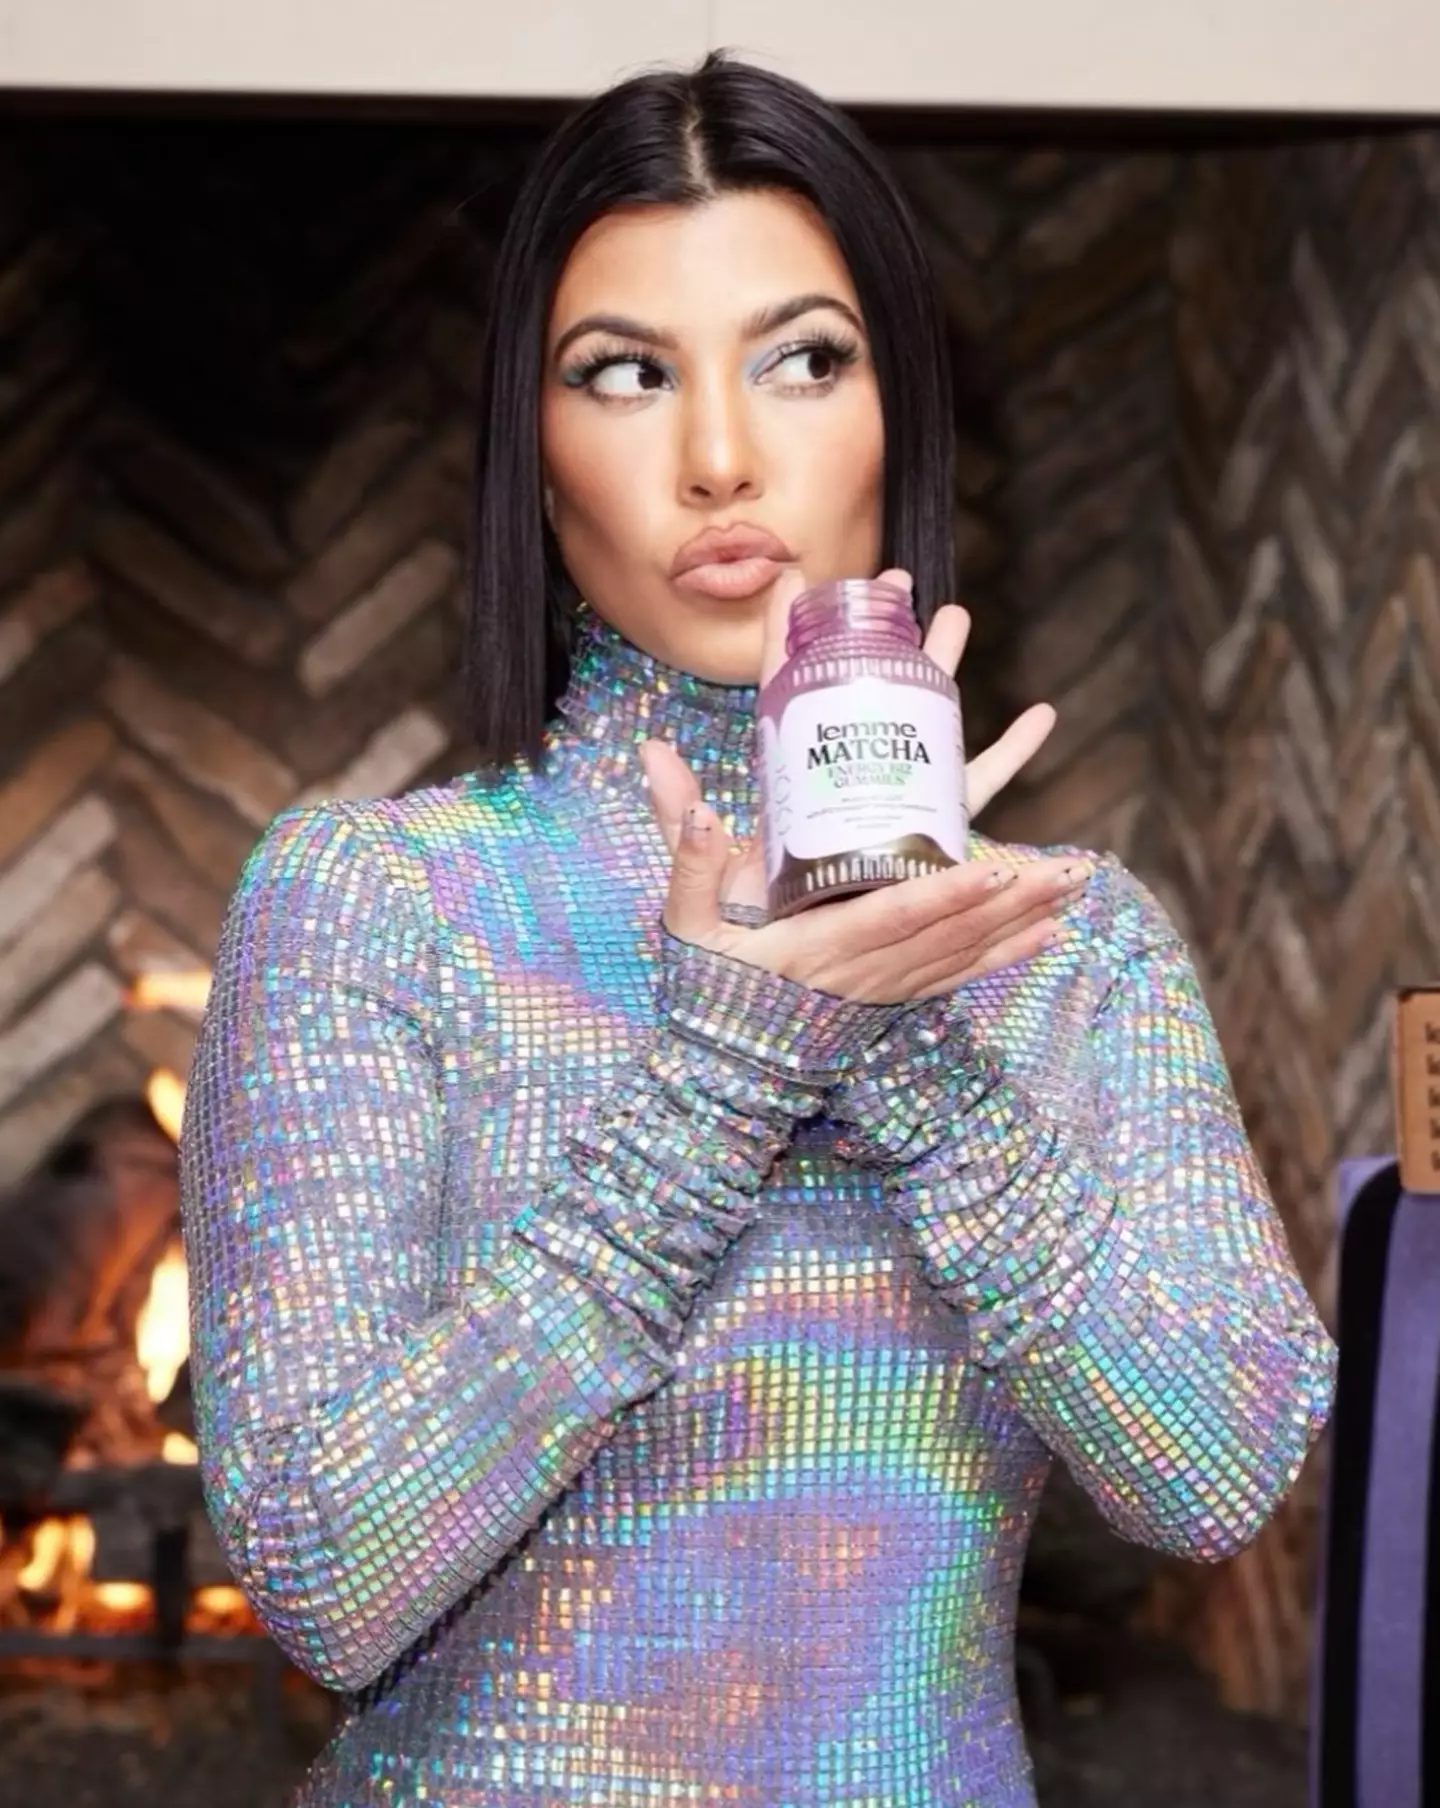 Kourtney Kardashian recently launched a new wellness brand of vitamins.